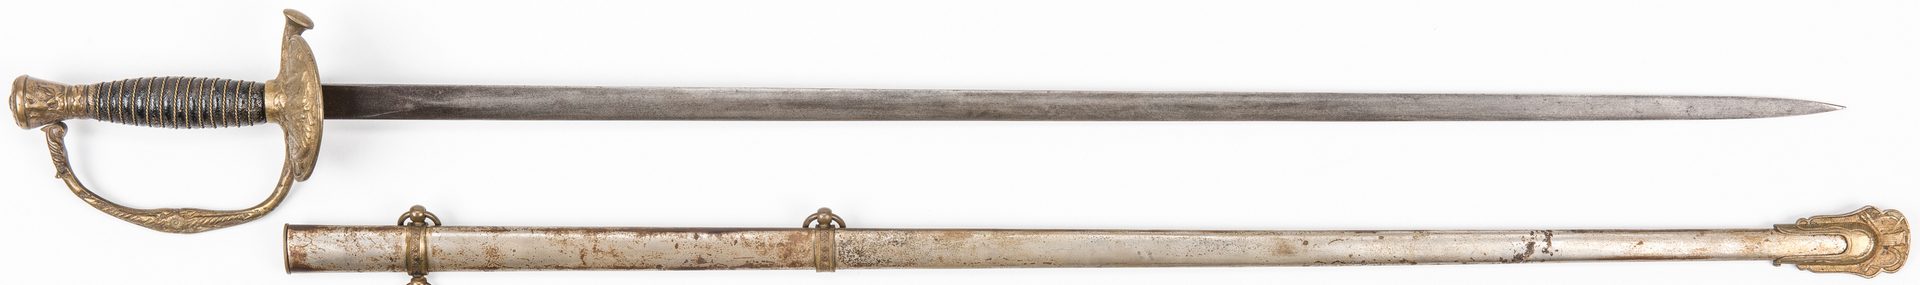 Lot 827: Civil War or Post Indian War Staff Sword, Belt Buckle, 2 items